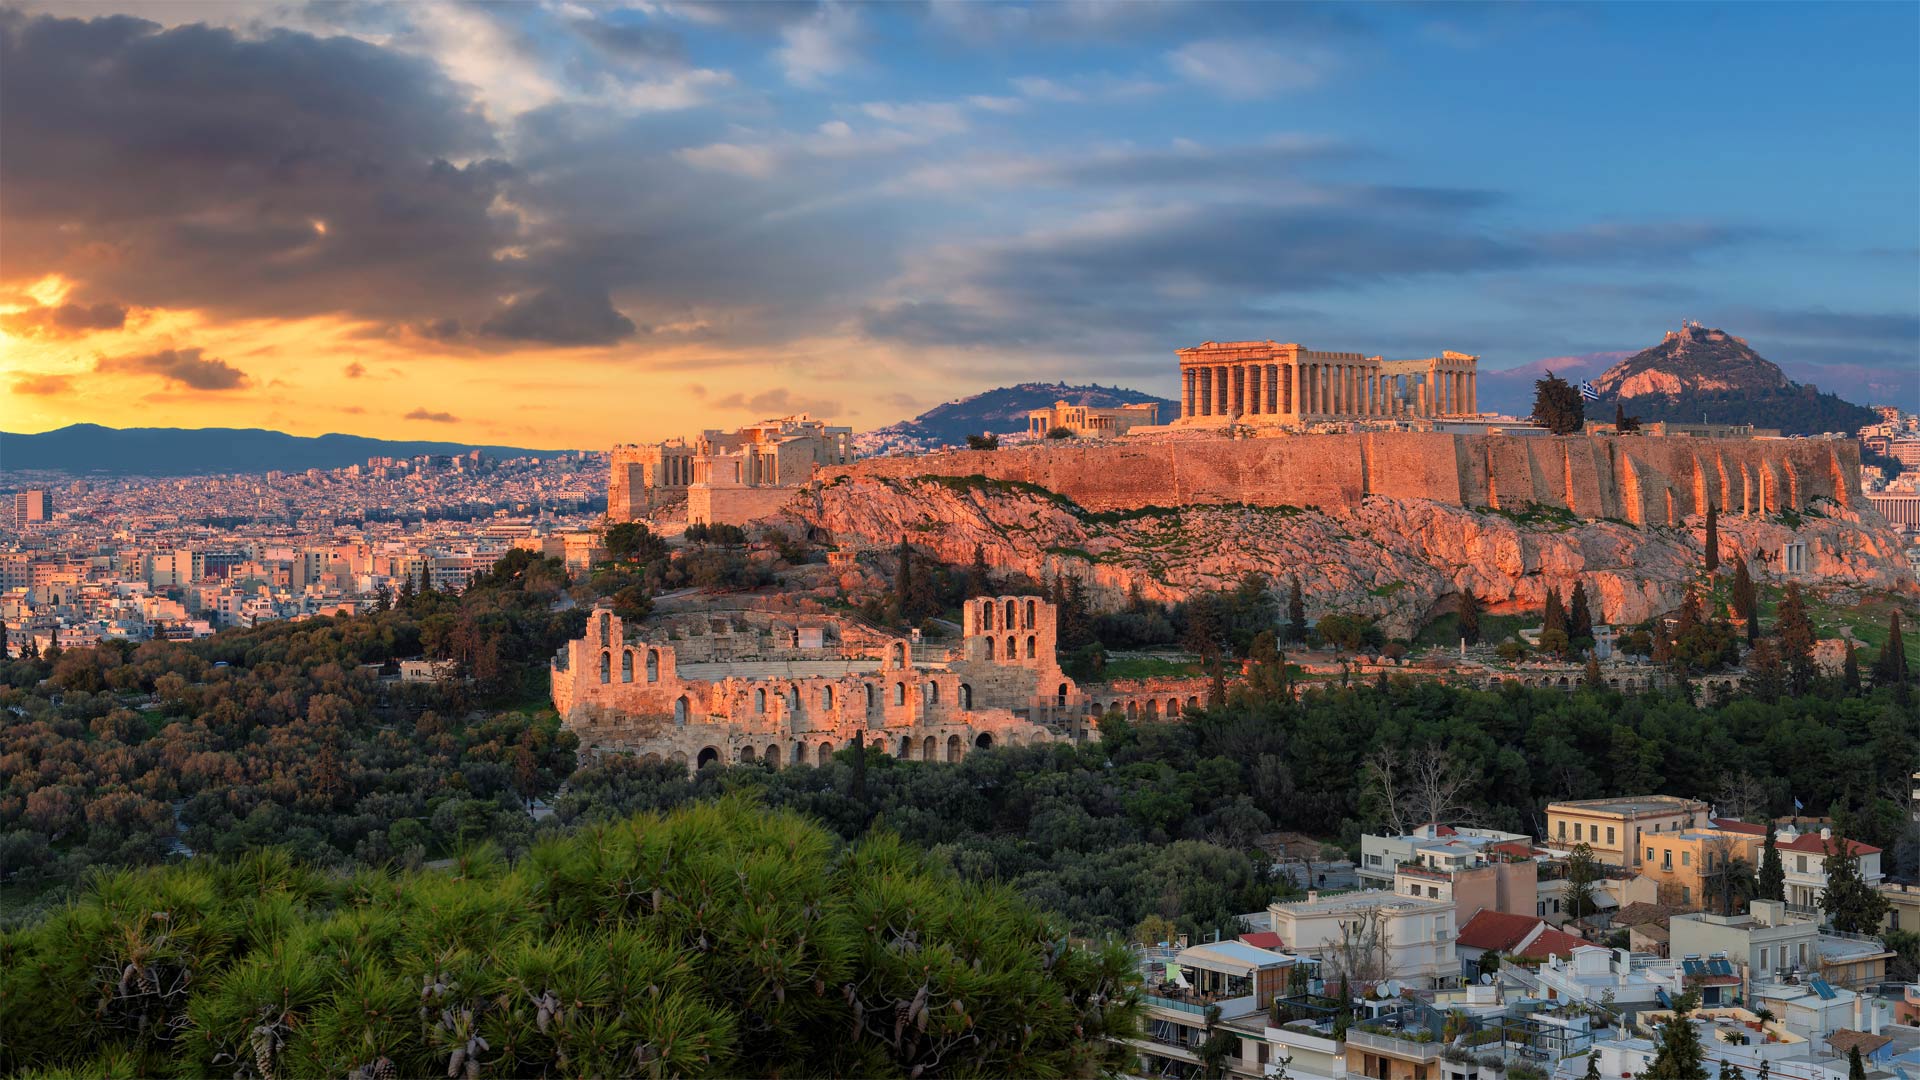 The Acropolis of Athens, Greece - Lucky-photographer/Shutterstock)